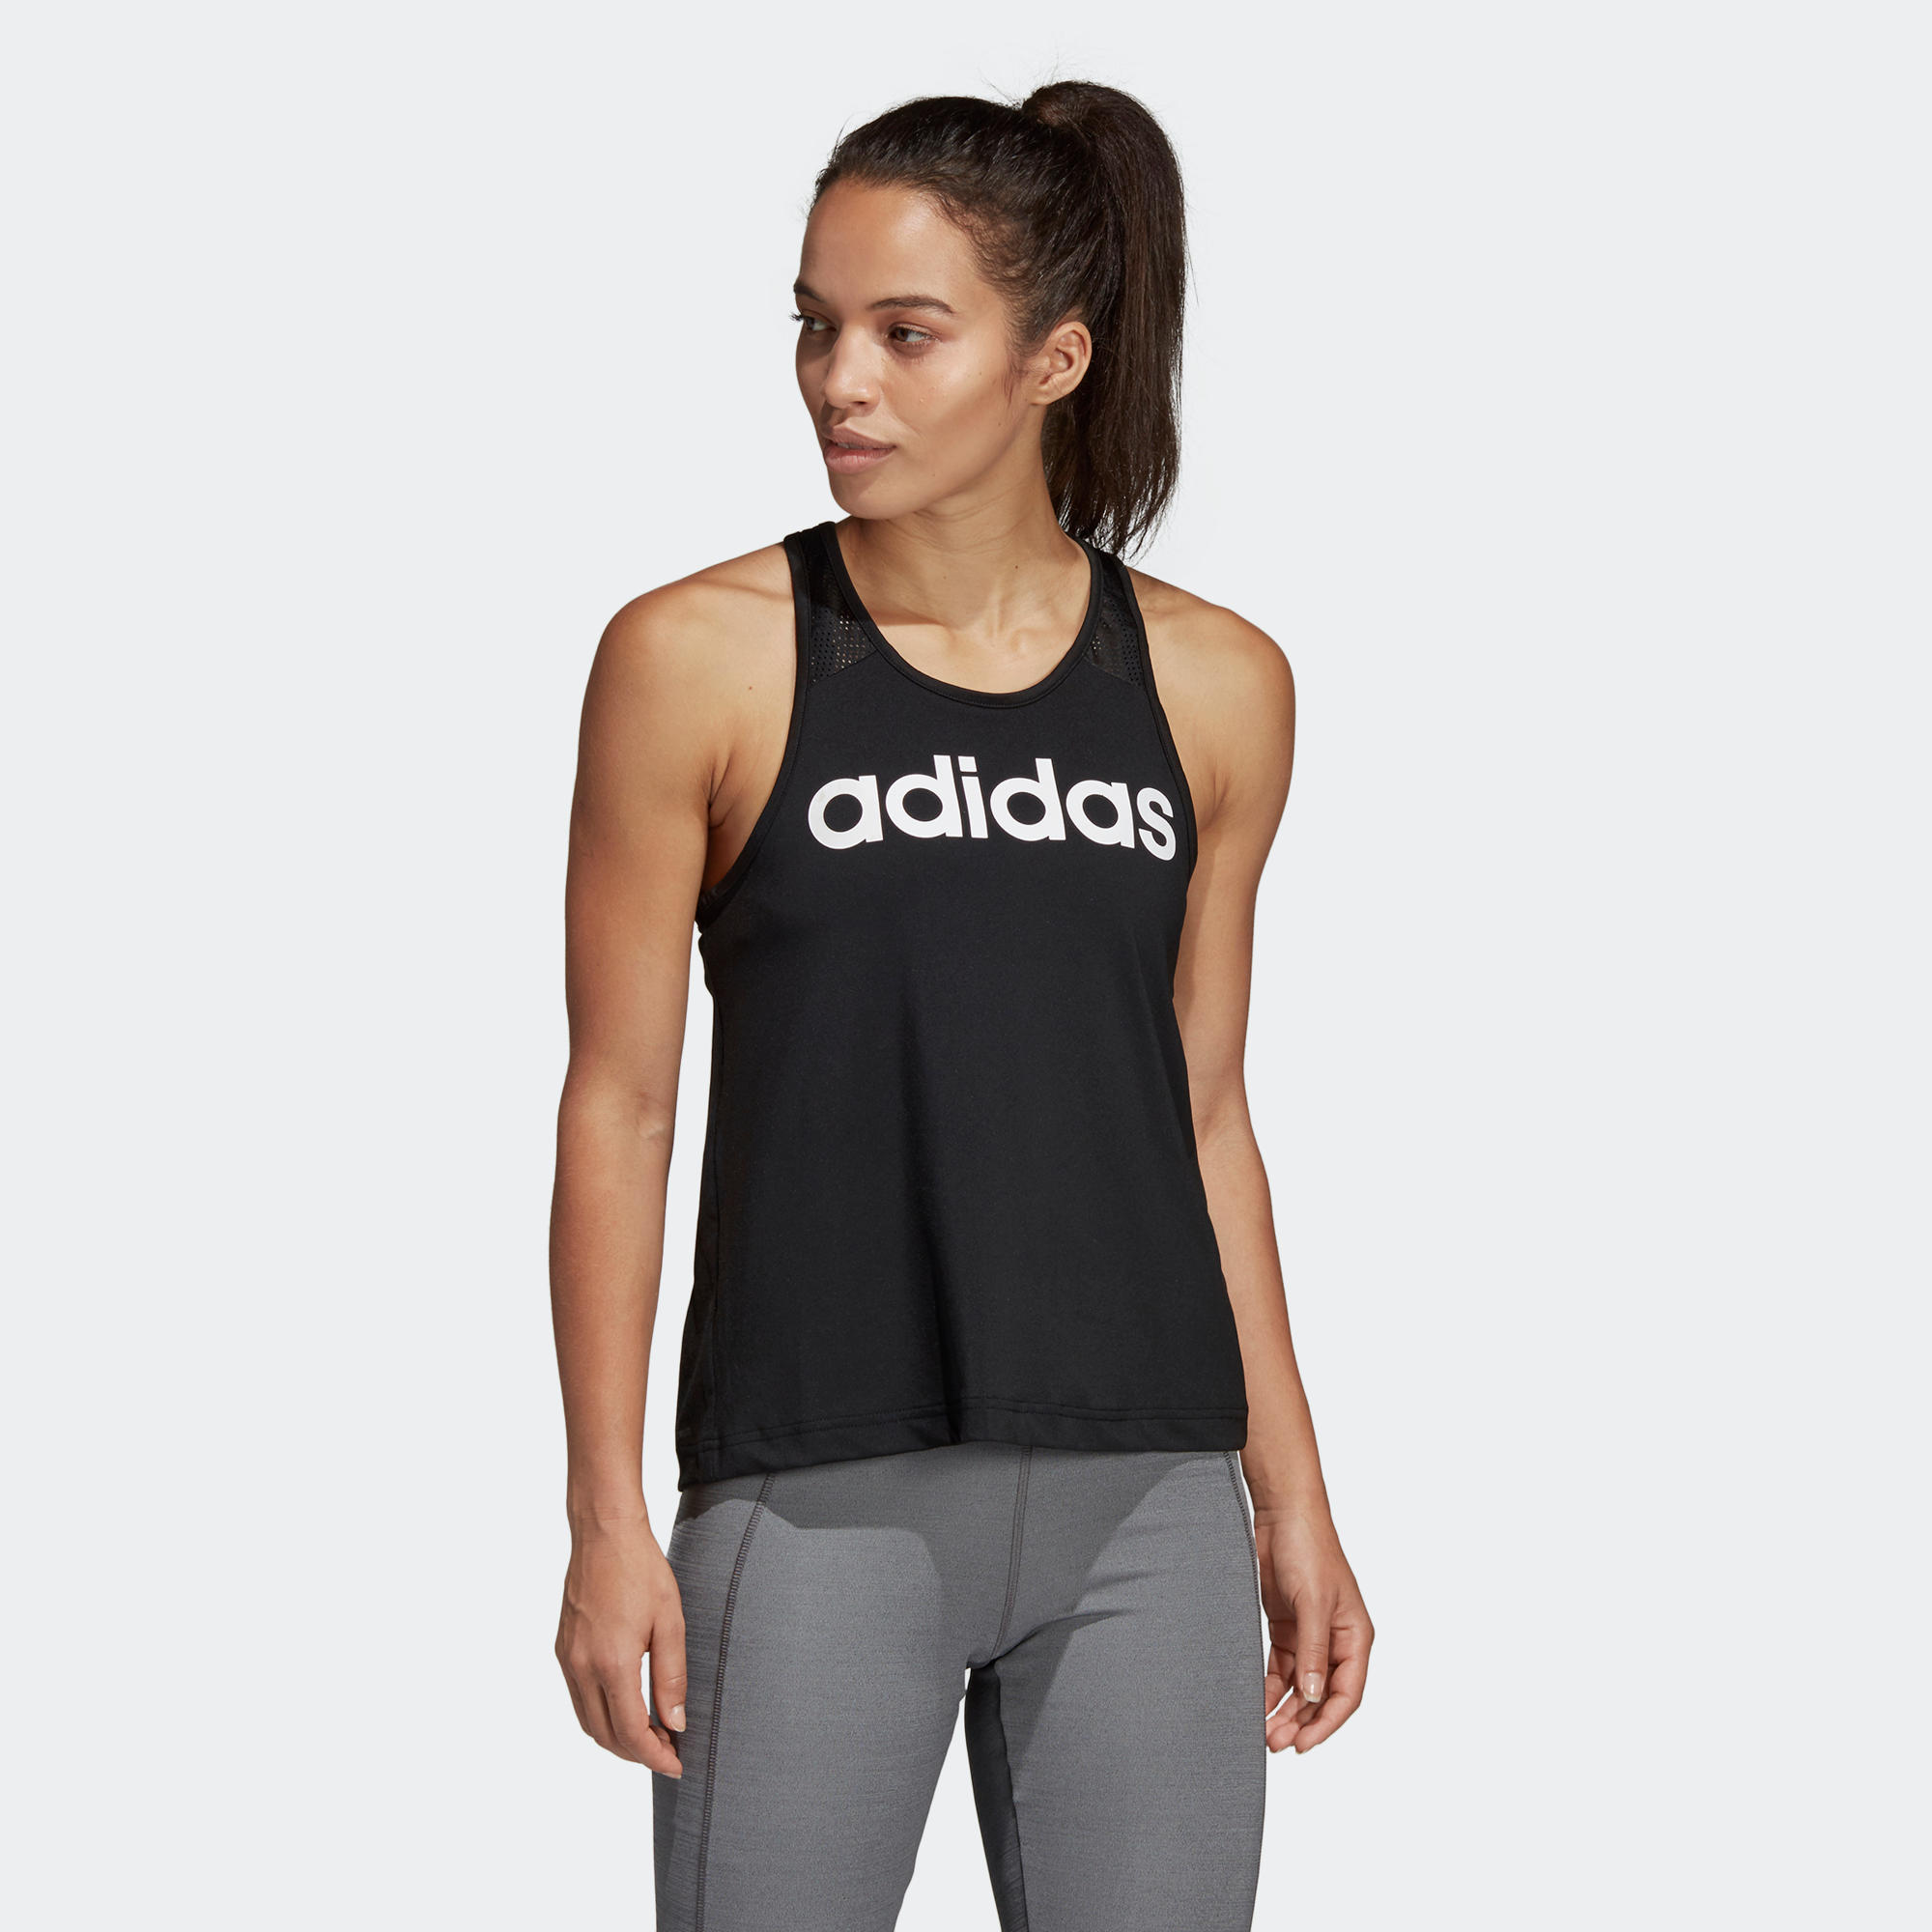 Camiseta tirantes Adidas mujer negro blanco ADIDAS - Decathlon